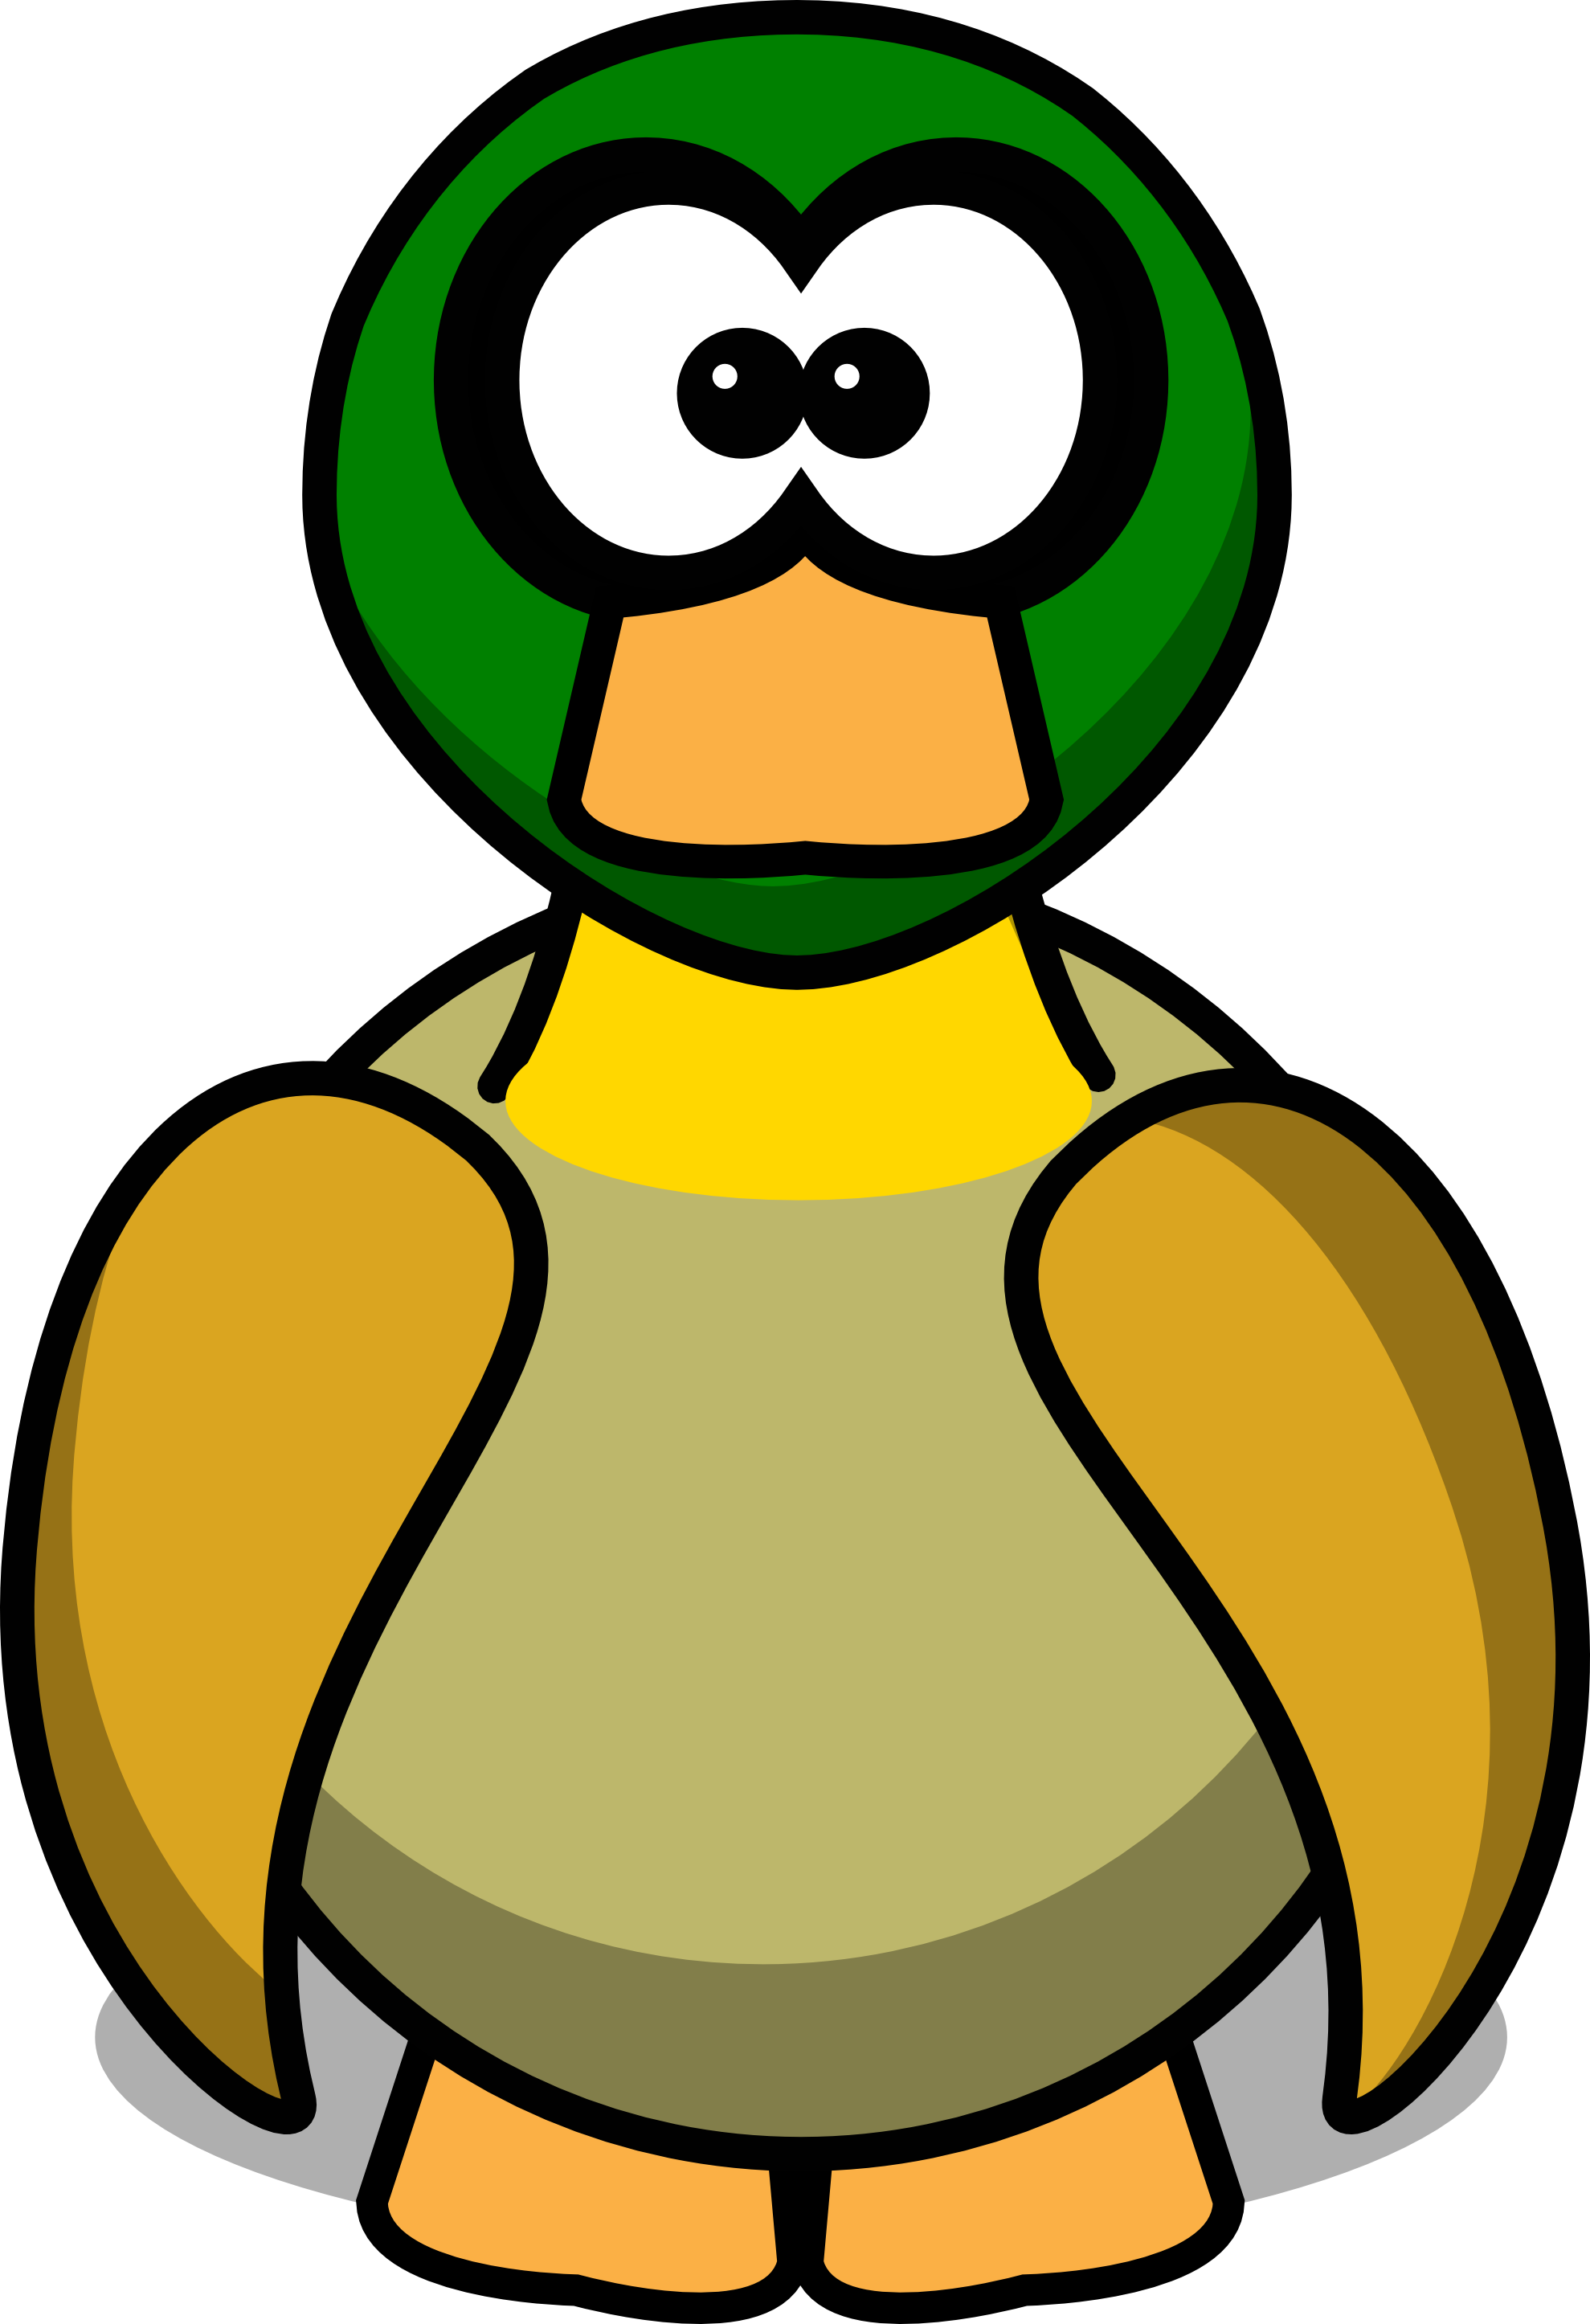 green duck clipart - photo #21